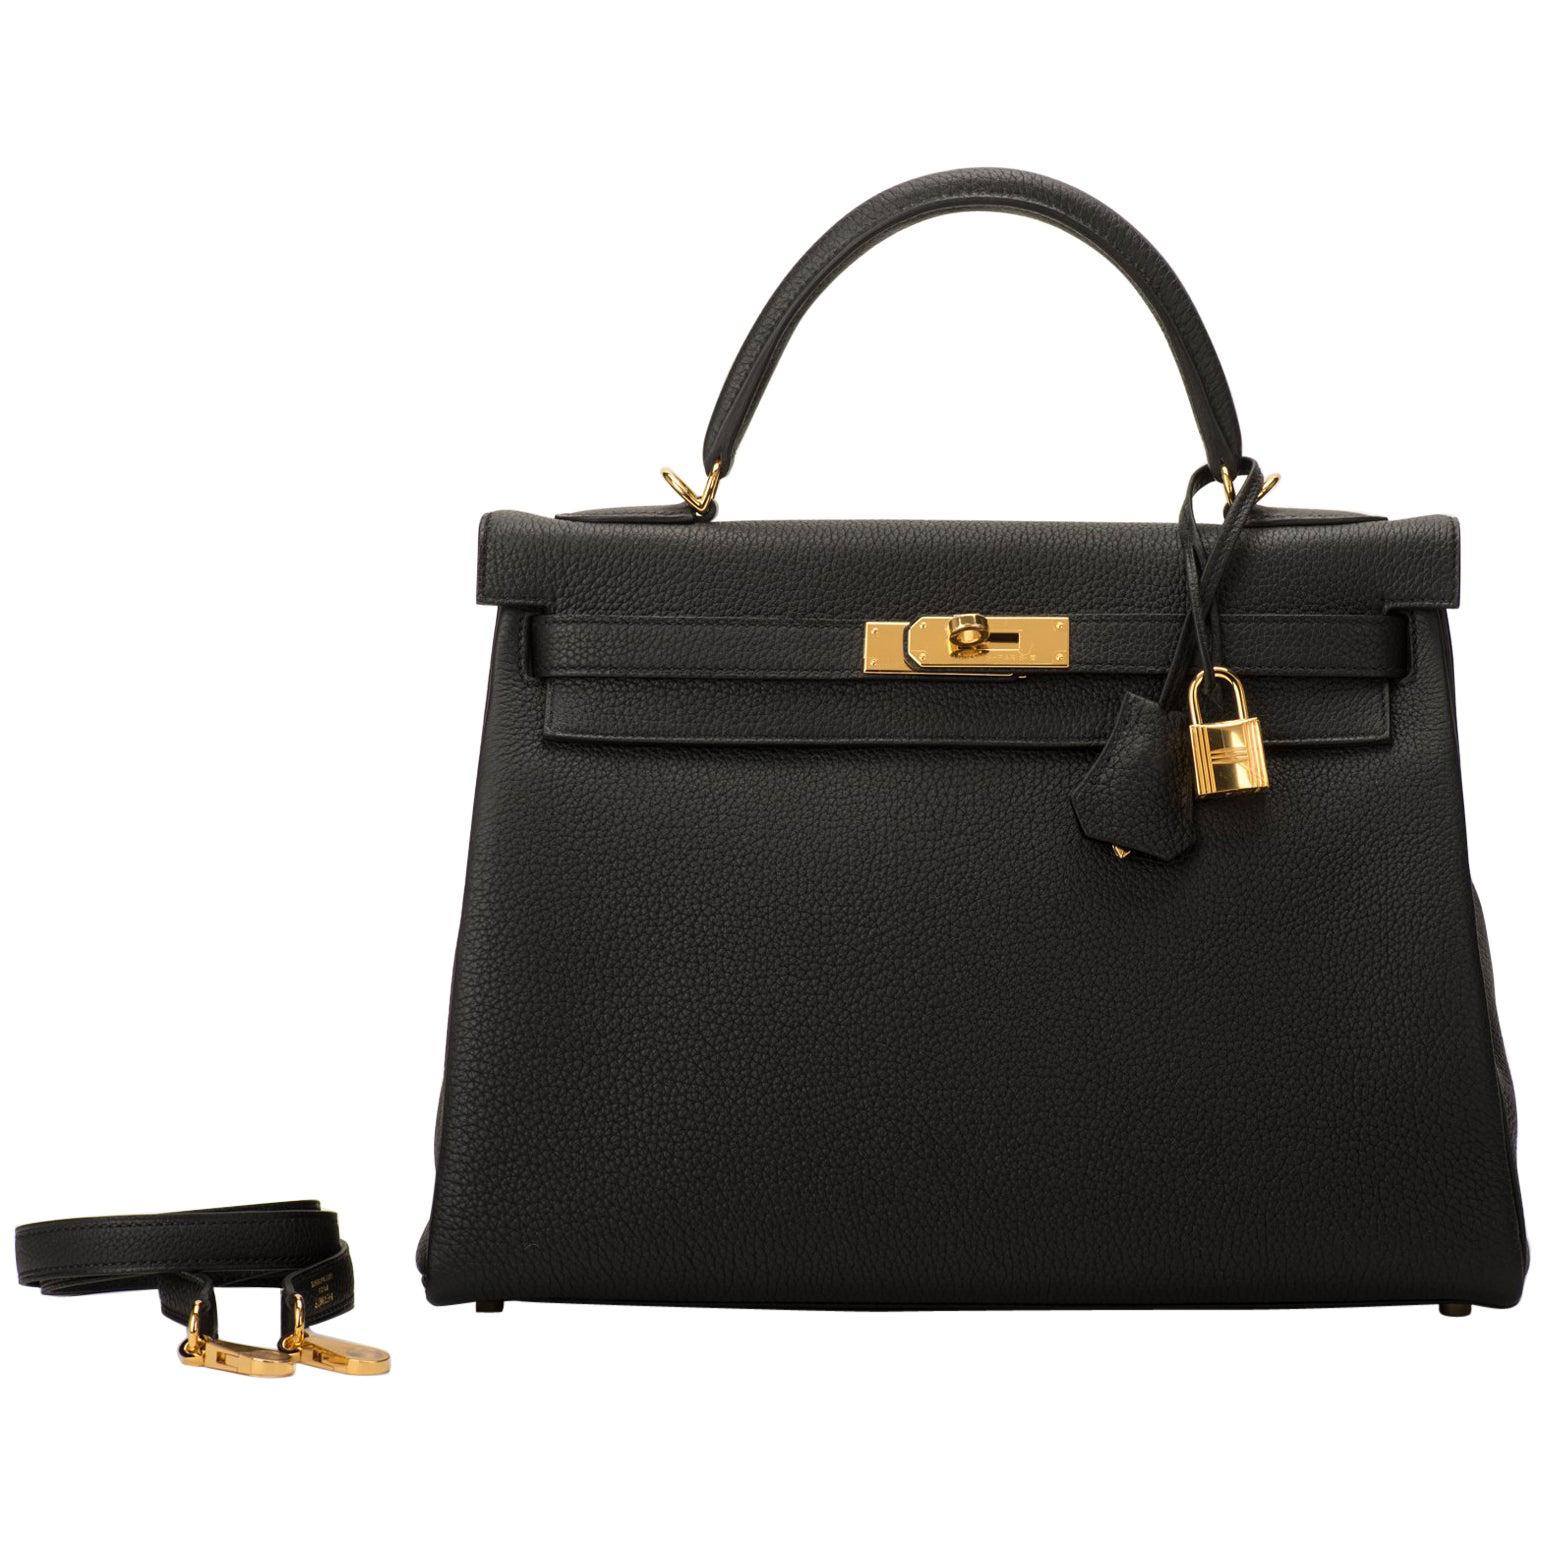 Brand New in Box Hermes Kelly 32 cm Togo Black Gold Bag